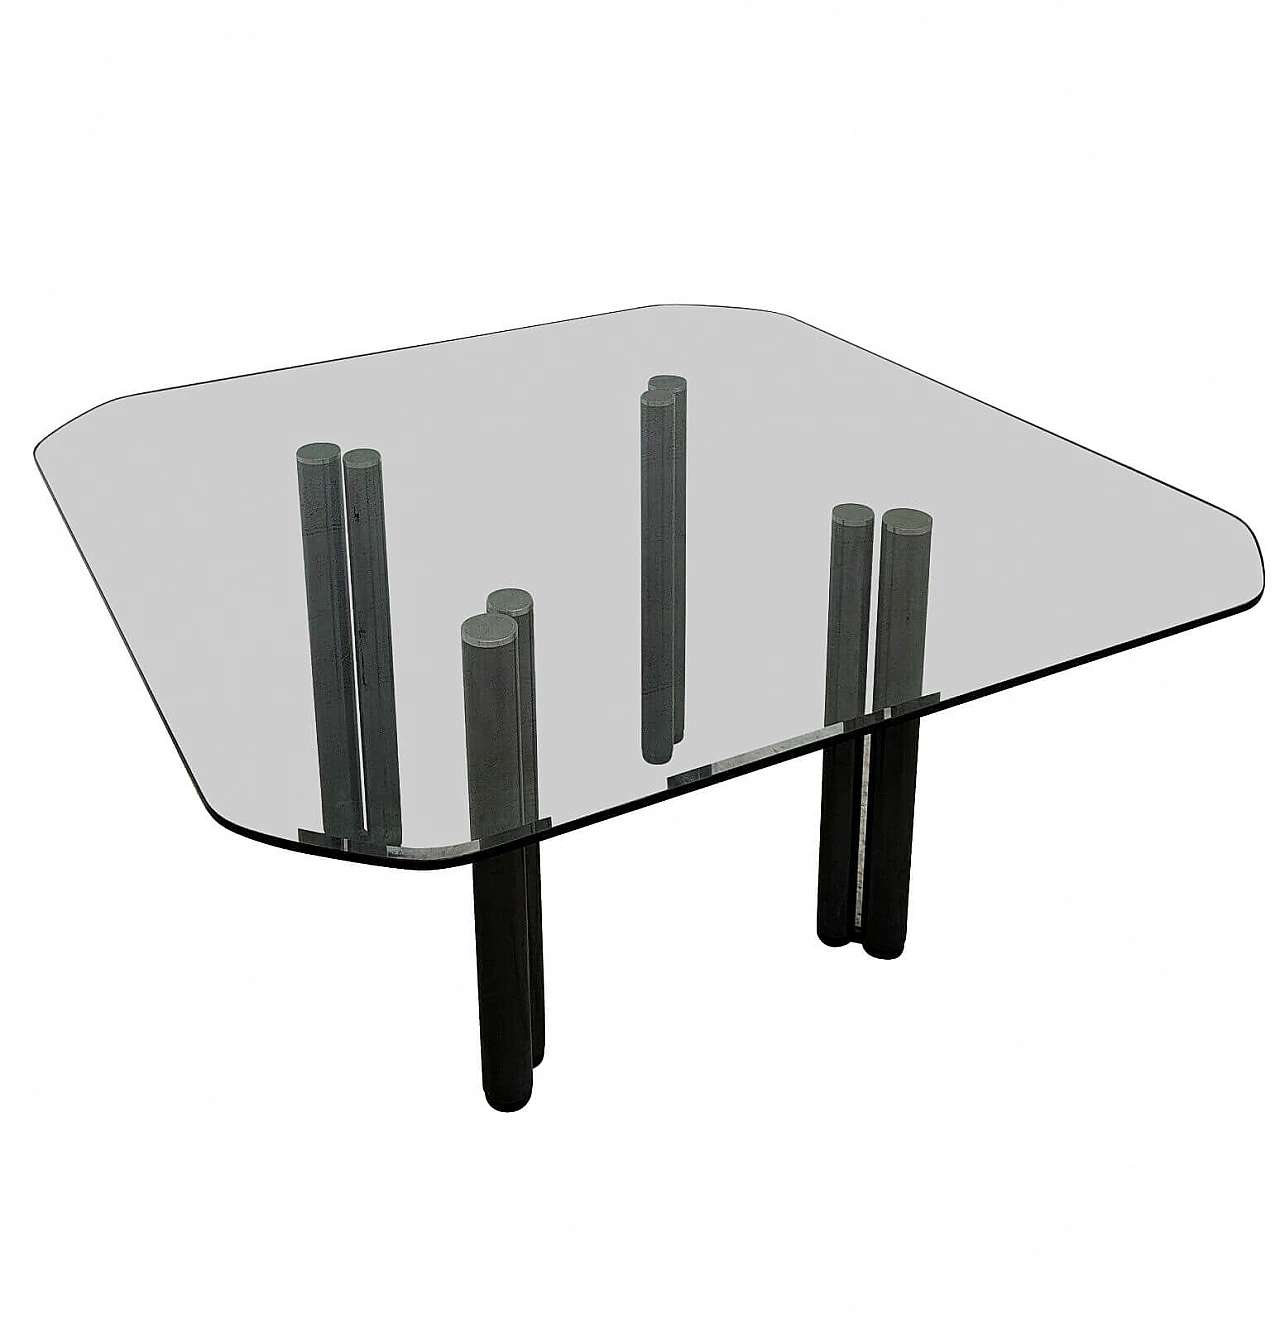 Eta Beta square table in steel with glass top by Marco Zanuso for Zanotta, 70s 1272429